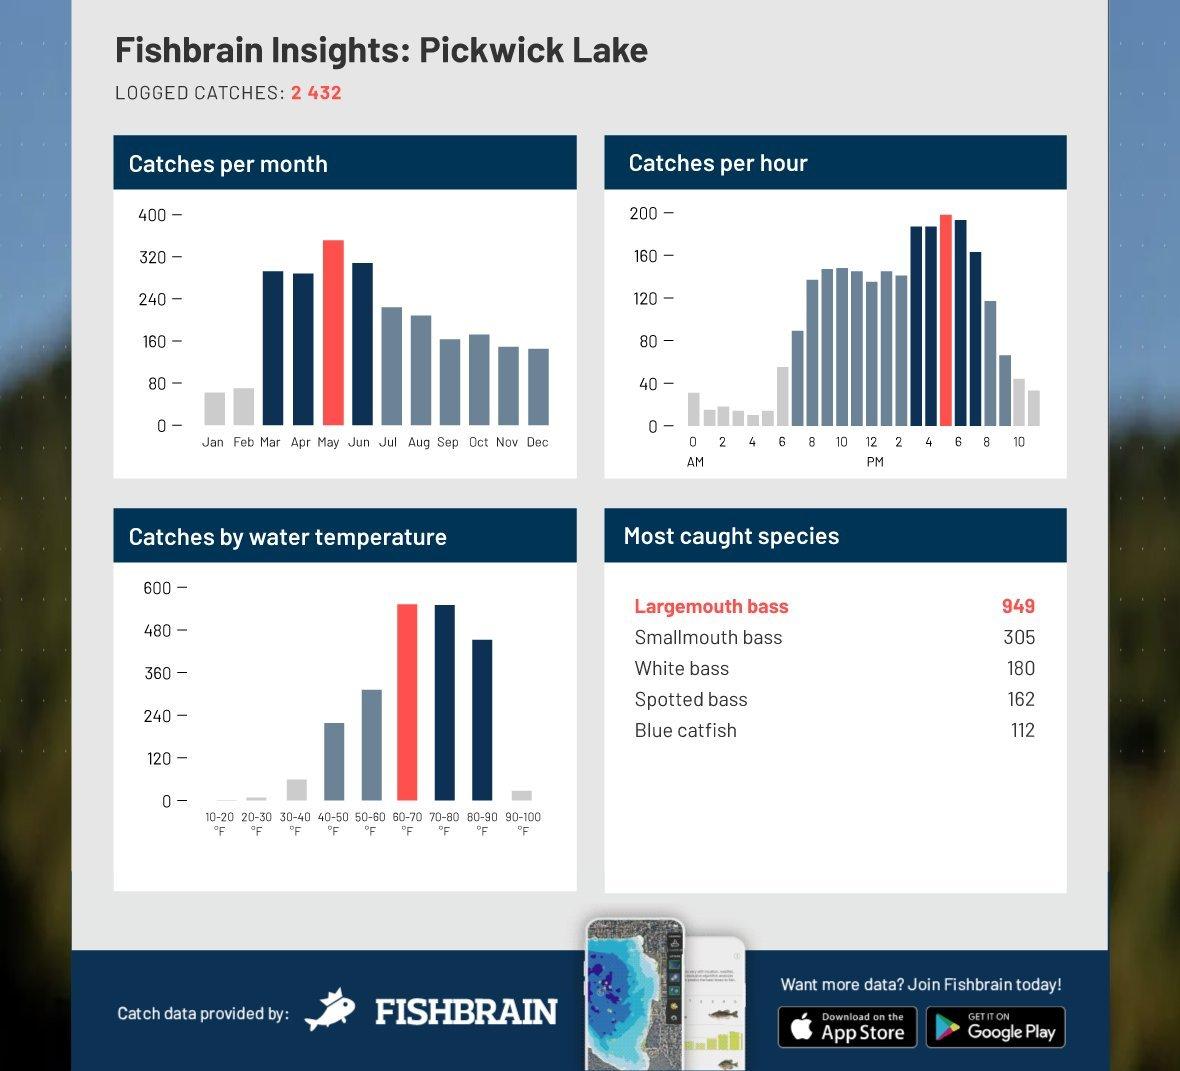 Visit the Fishbrain website